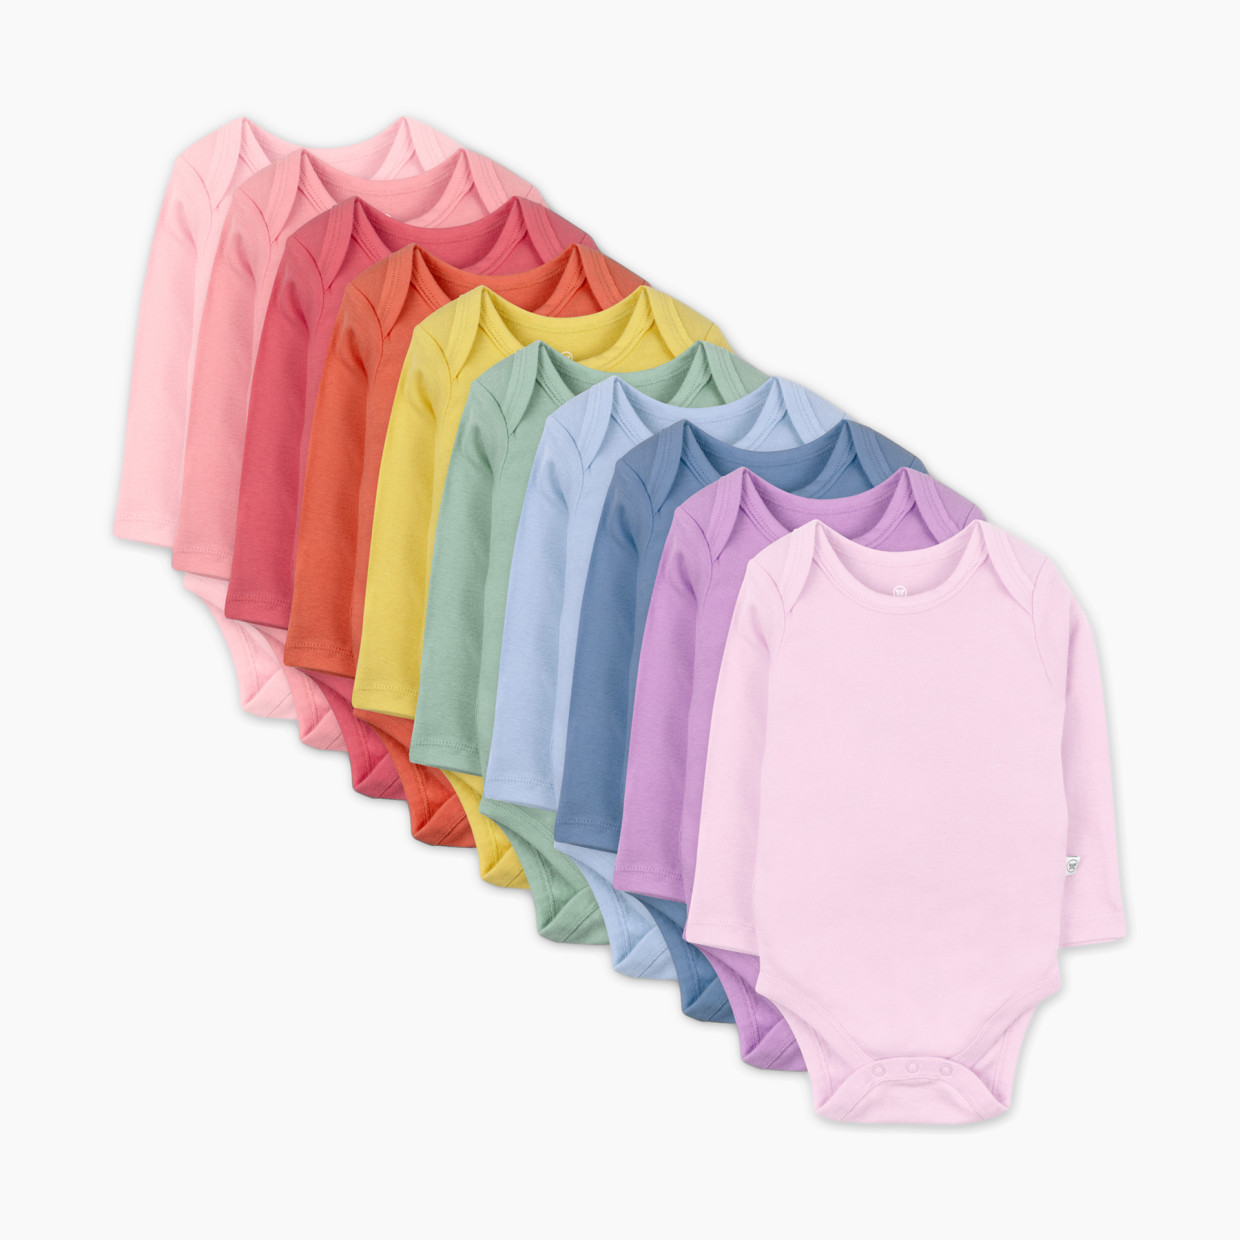 Honest Baby Clothing 10-Pack Organic Cotton Long Sleeve Bodysuits - Rainbow Gem Pinks, 3-6 M, 10.